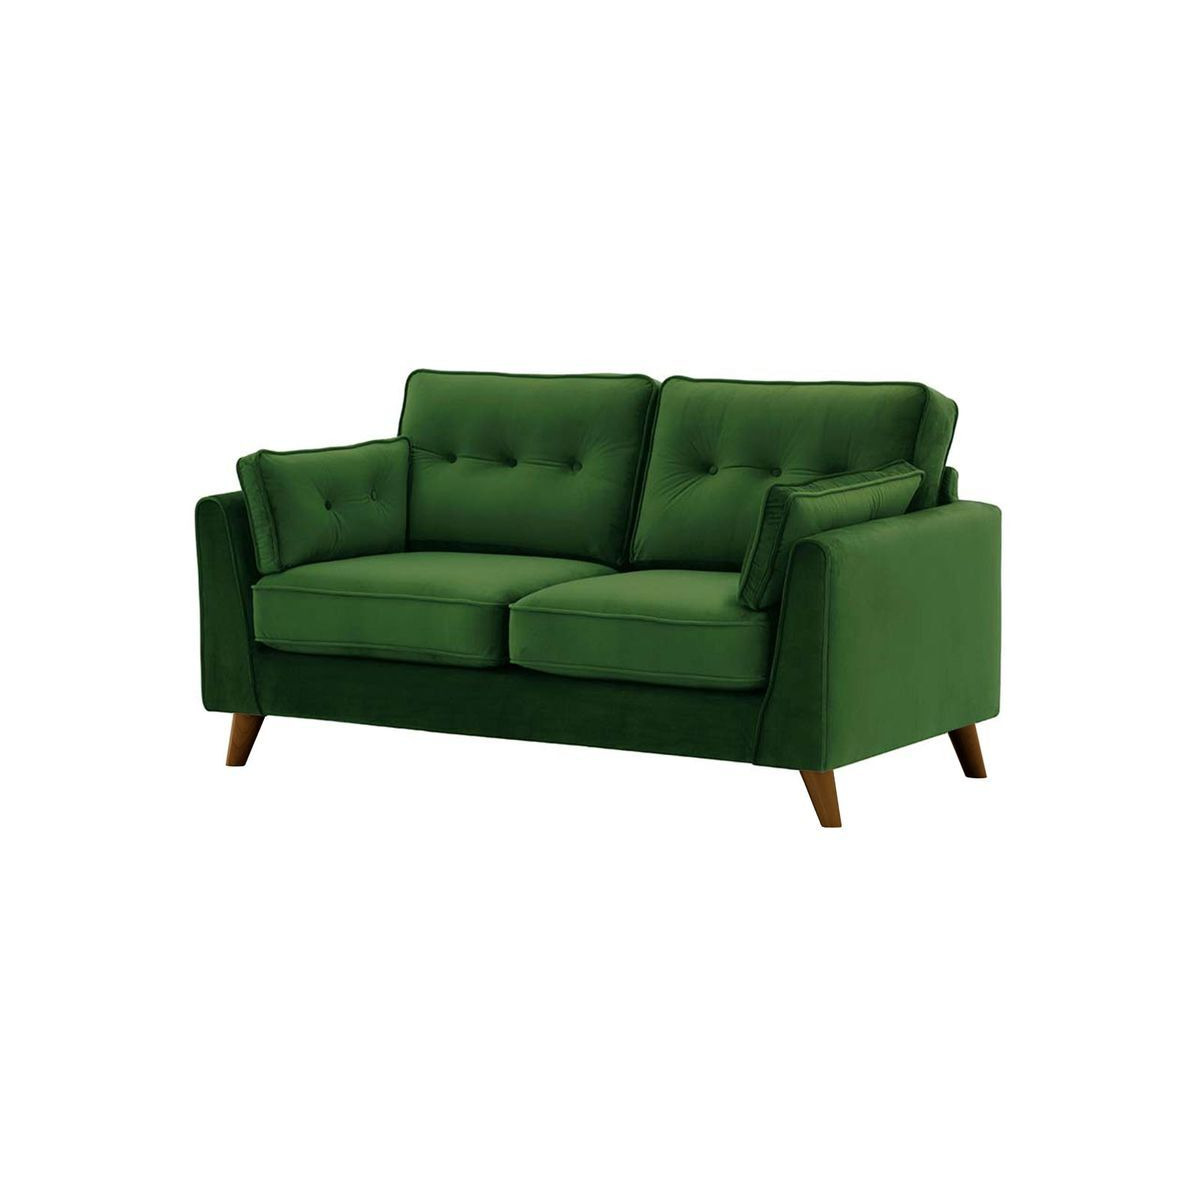 Magnus 2 Seater Sofa, turquoise, Leg colour: aveo - image 1